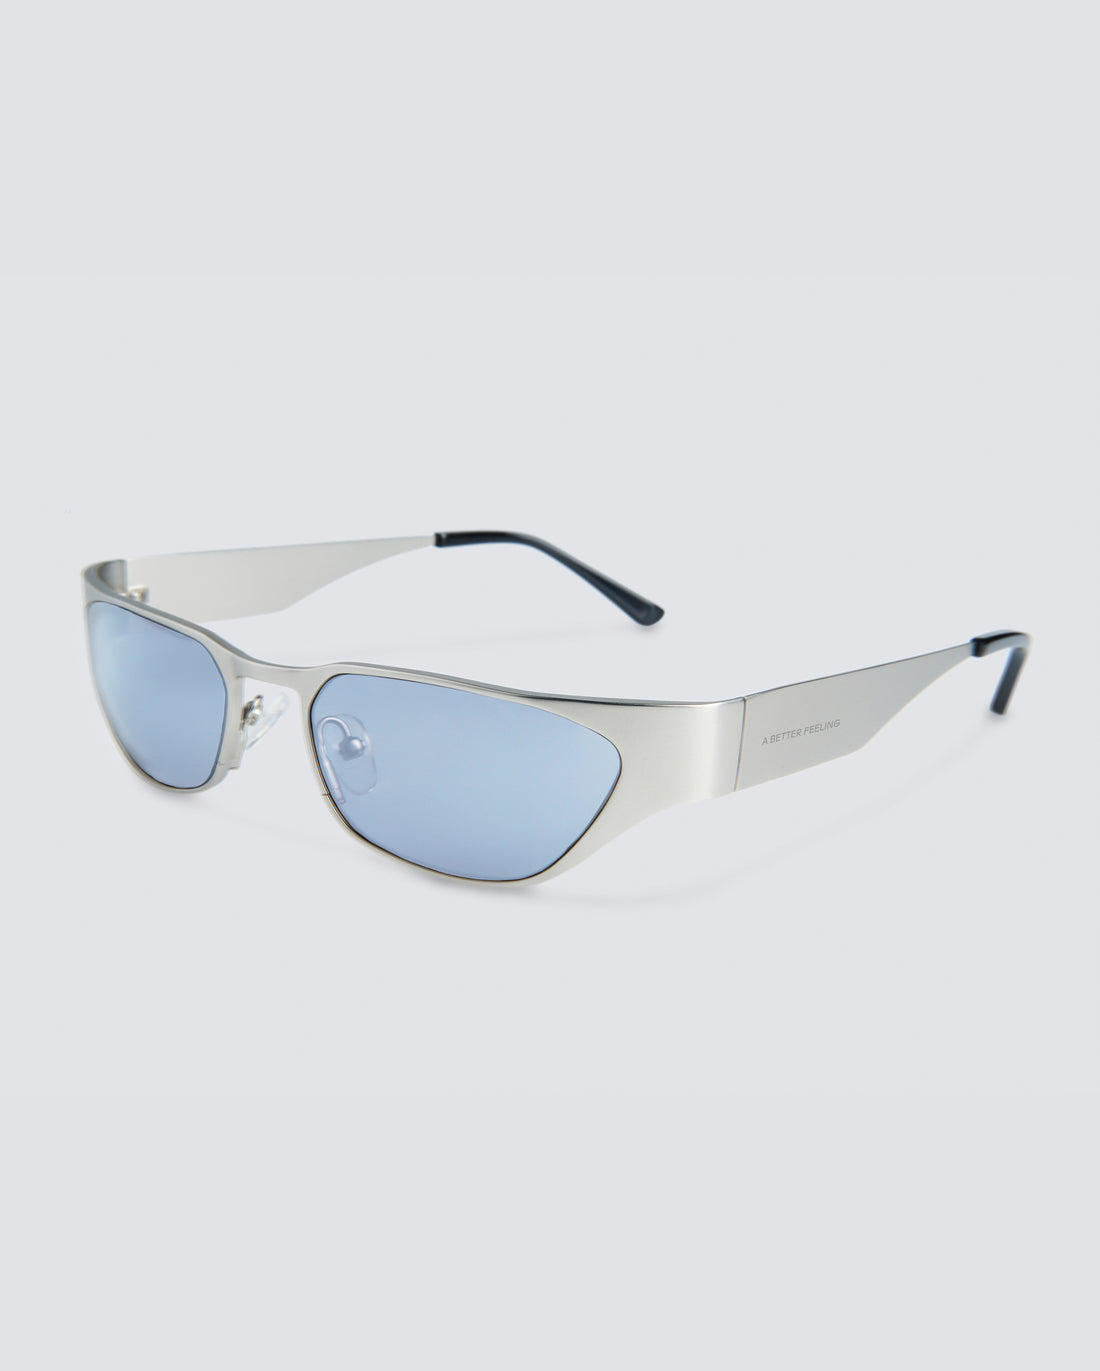 A BETTER FEELING - ECHINO CLOUD BLUE Sunglasses